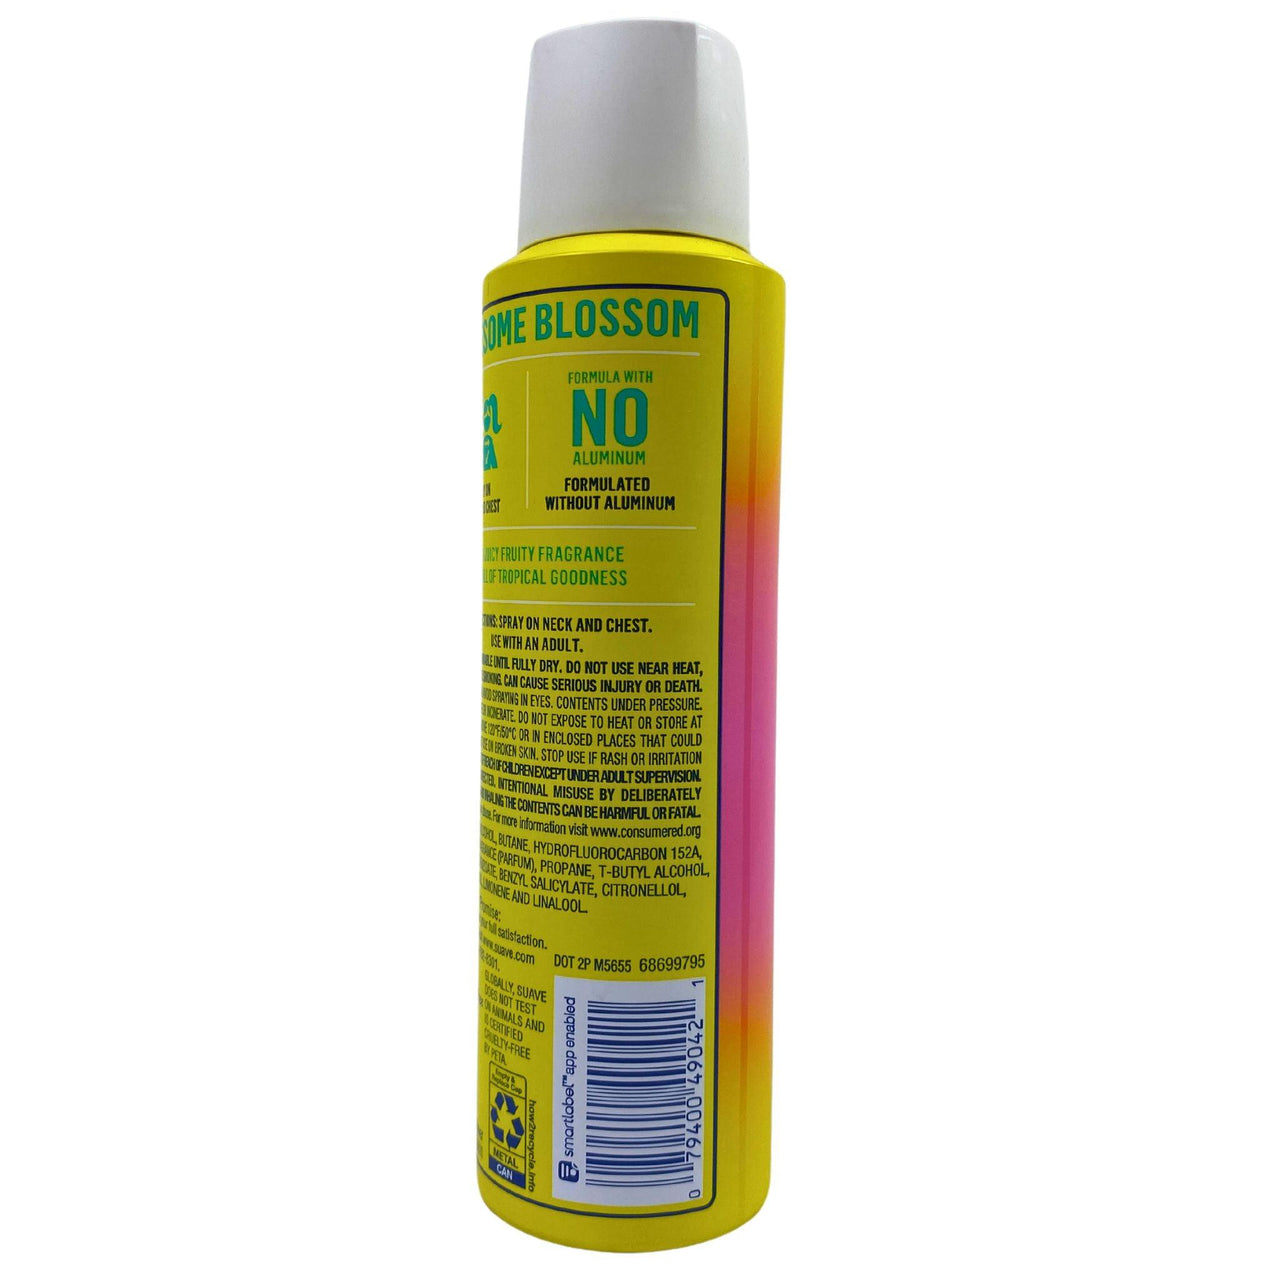 Suave Fresh Vibes Awesome Blossom Deodorant Body Spray 4OZ (42 Pcs lot) - Discount Wholesalers Inc